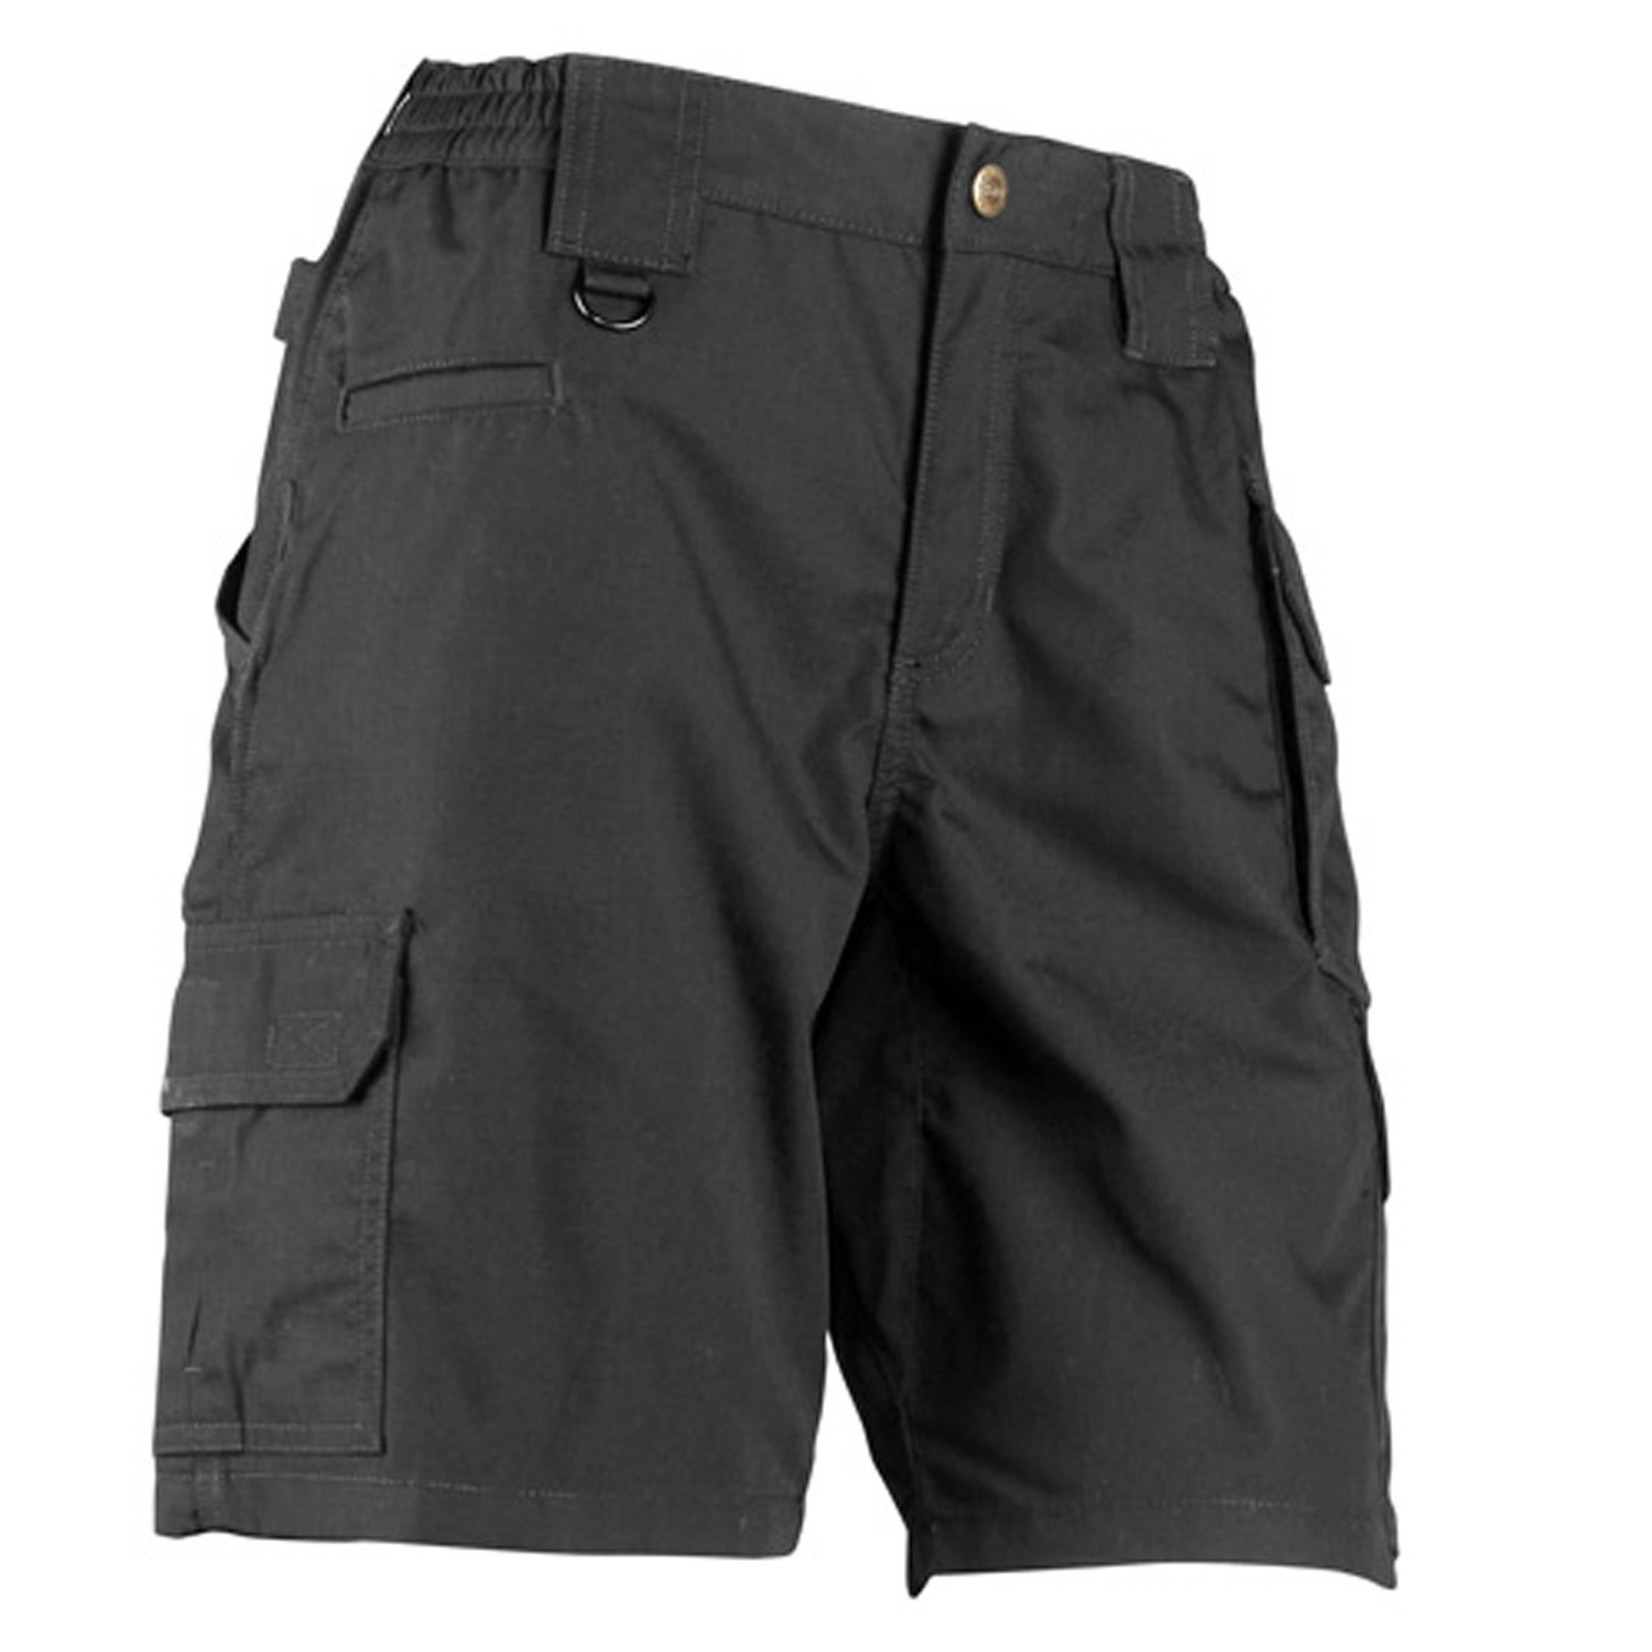 5.11 5.11 WMN Taclite Shorts